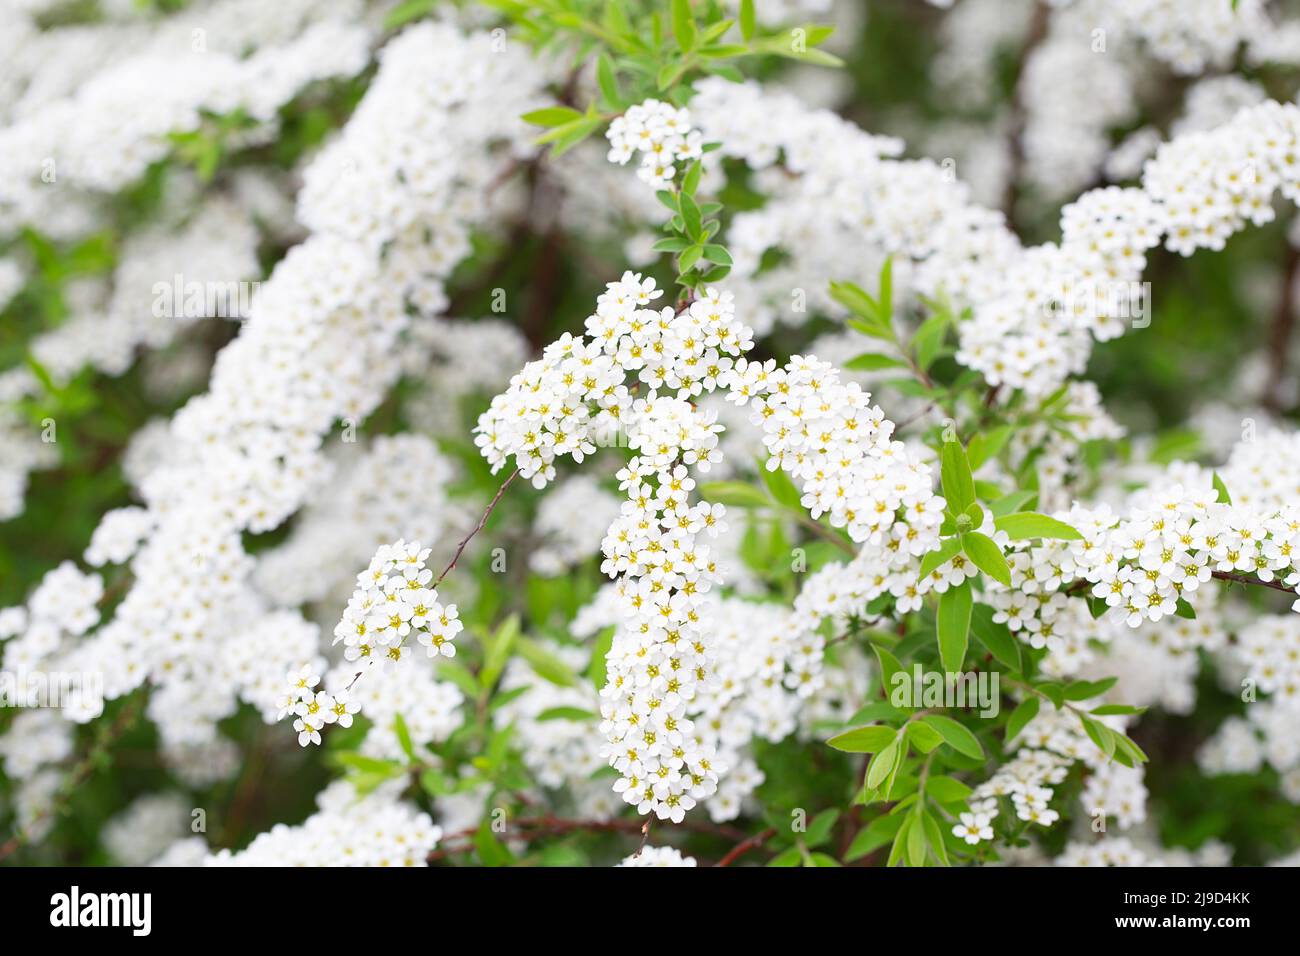 Blossom of Spirea nipponica Snowmound in springtime. White flowers of spirea in garden. Decorative flowering shrubs for landscape design. Spring flora Stock Photo